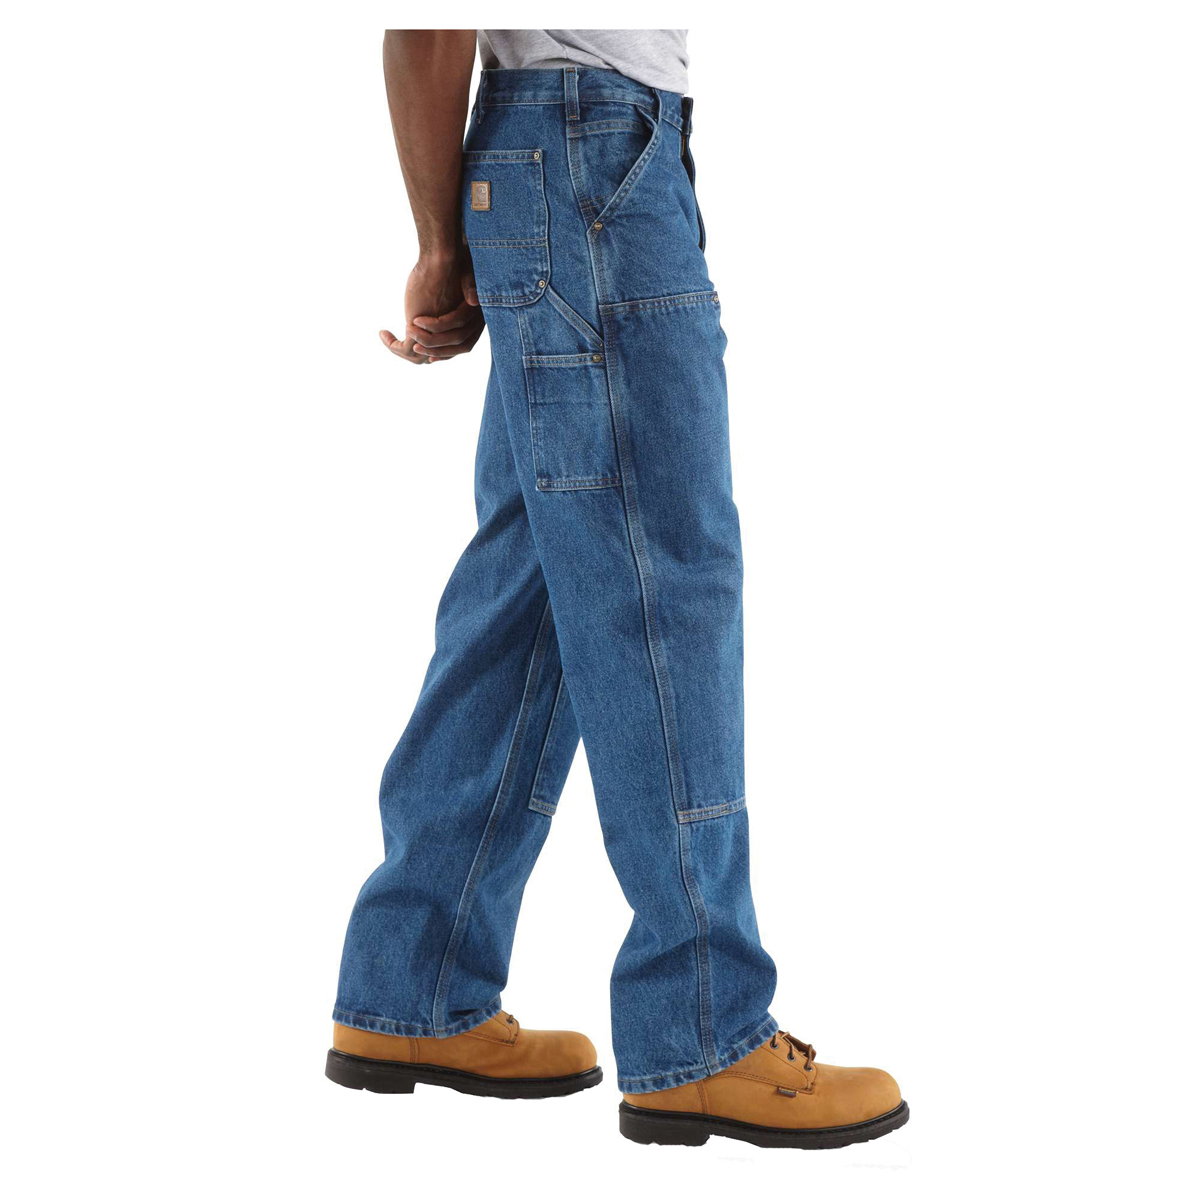 Carhartt B73-DST-40X30 Utility Logger Jeans, 40 in Waist, 30 in L Inseam, Darkstone, Loose Fit - 7